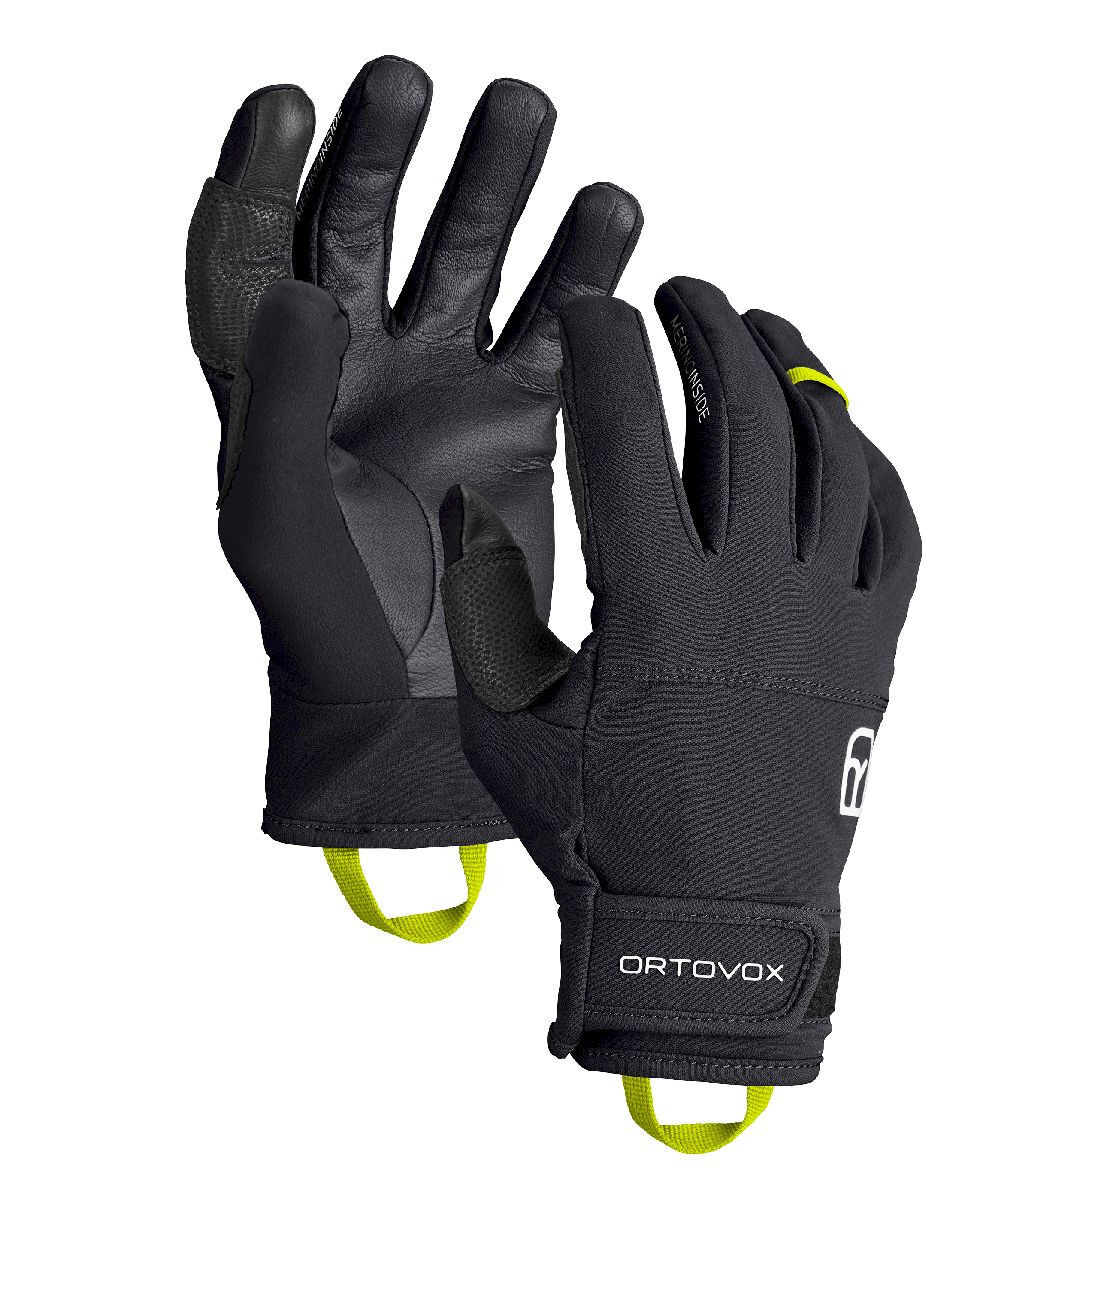 Ortovox Tour Light Glove - Hiihtohanskat - Miehet